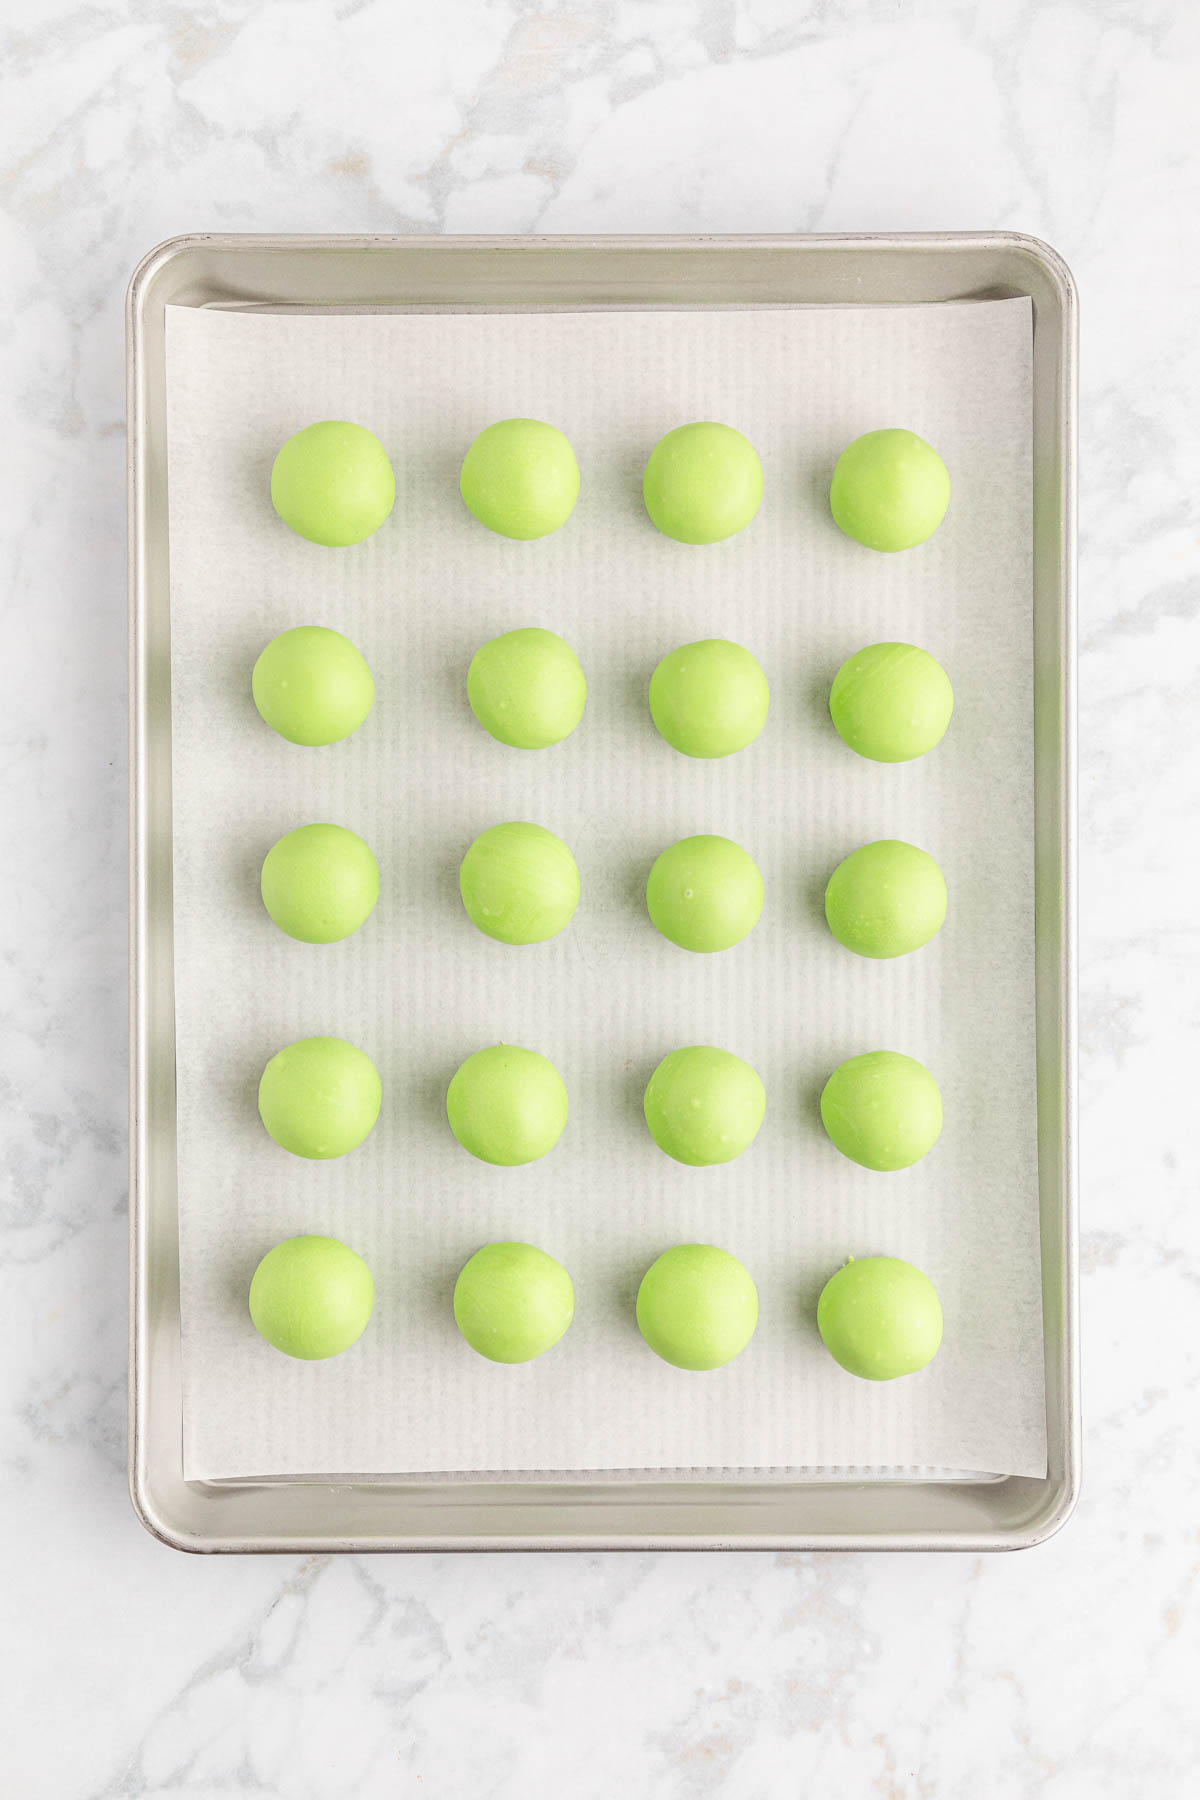 Green Oreo balls on a baking sheet.